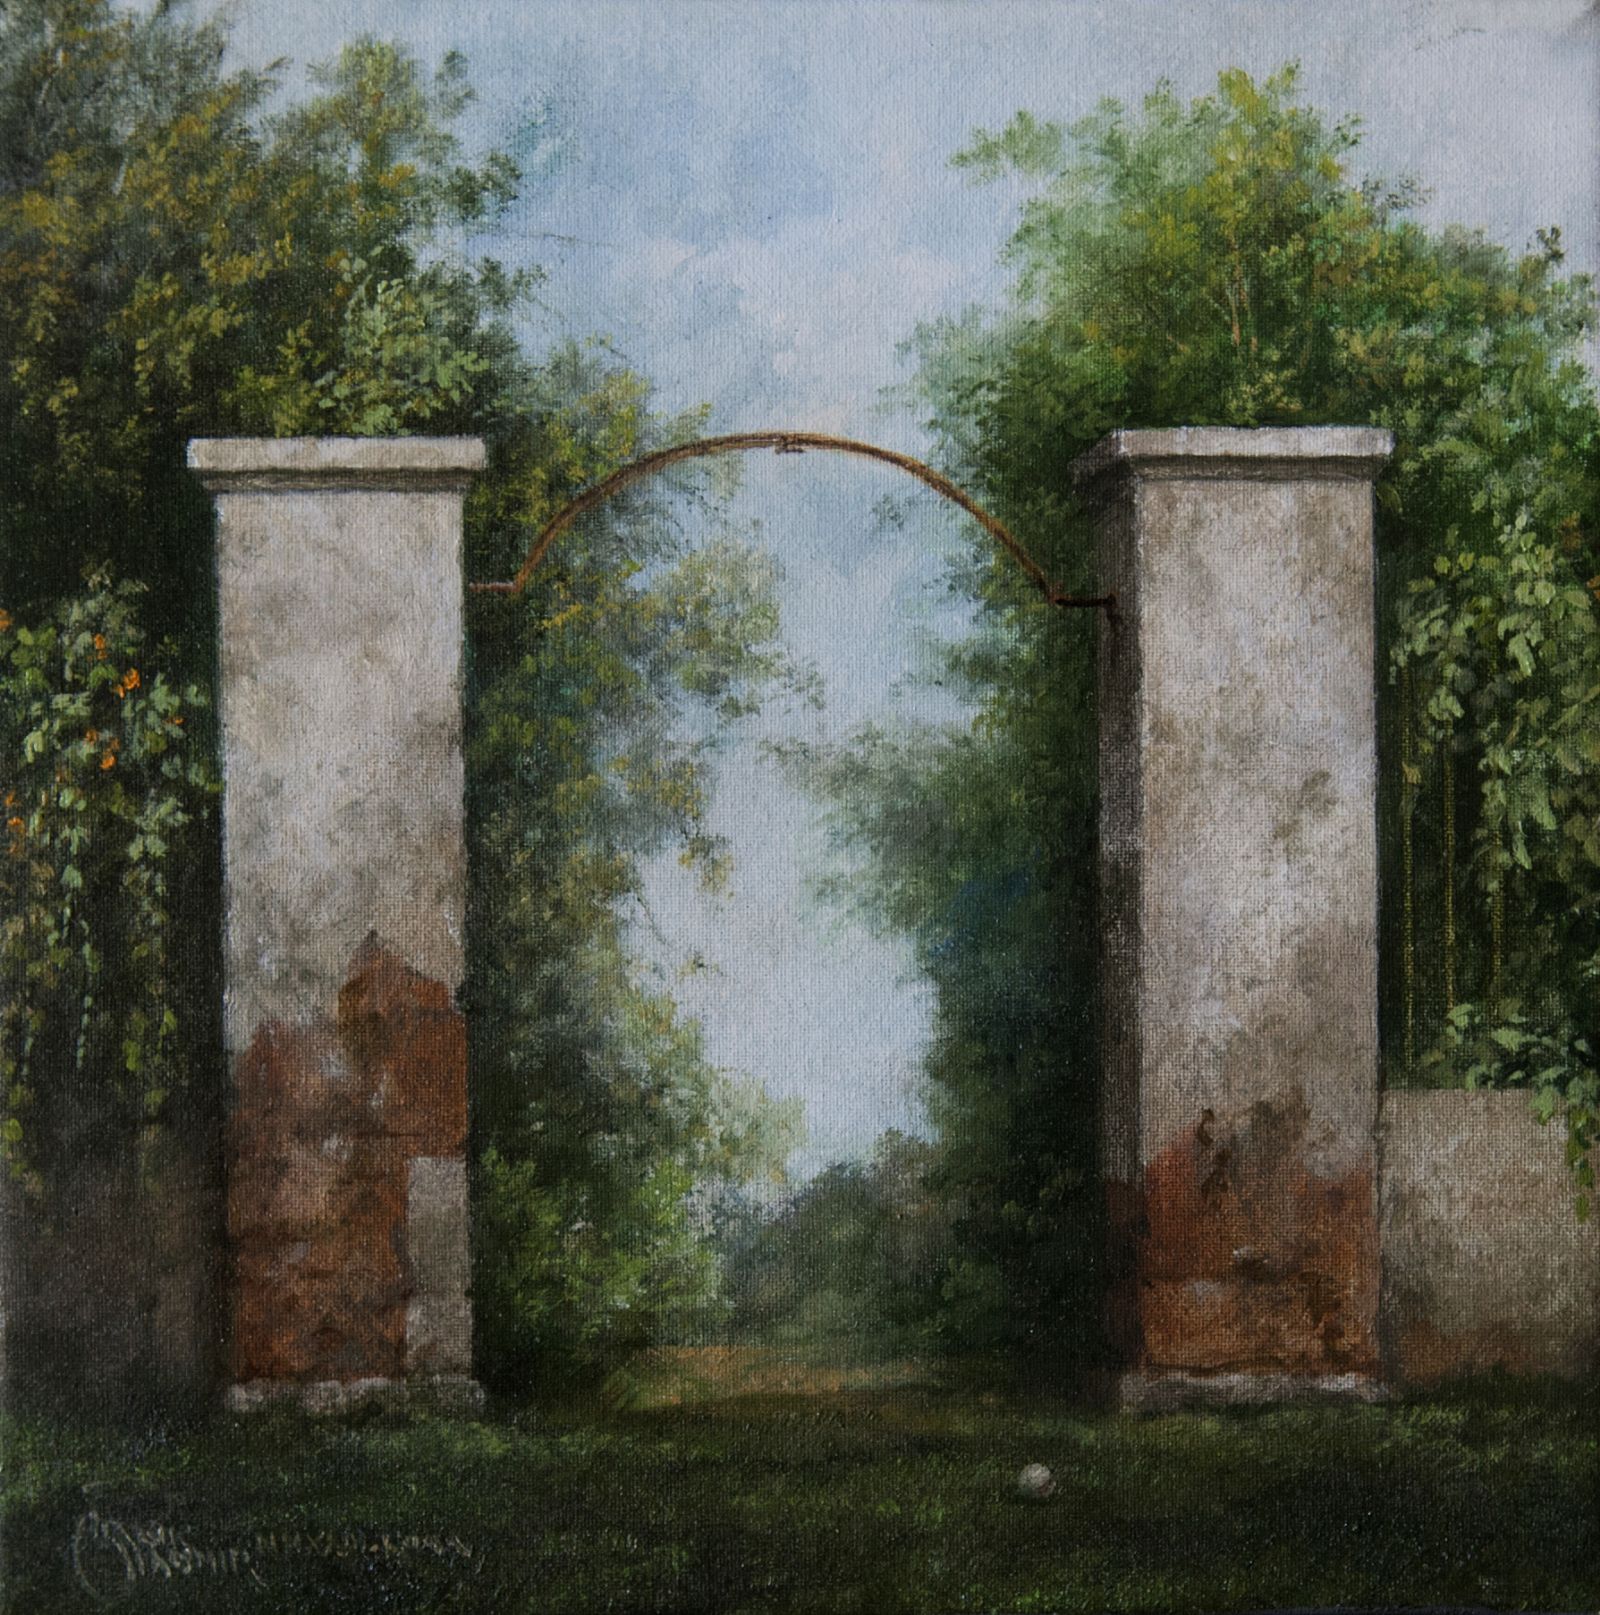 Southern Gate by Vladimir Pajevic